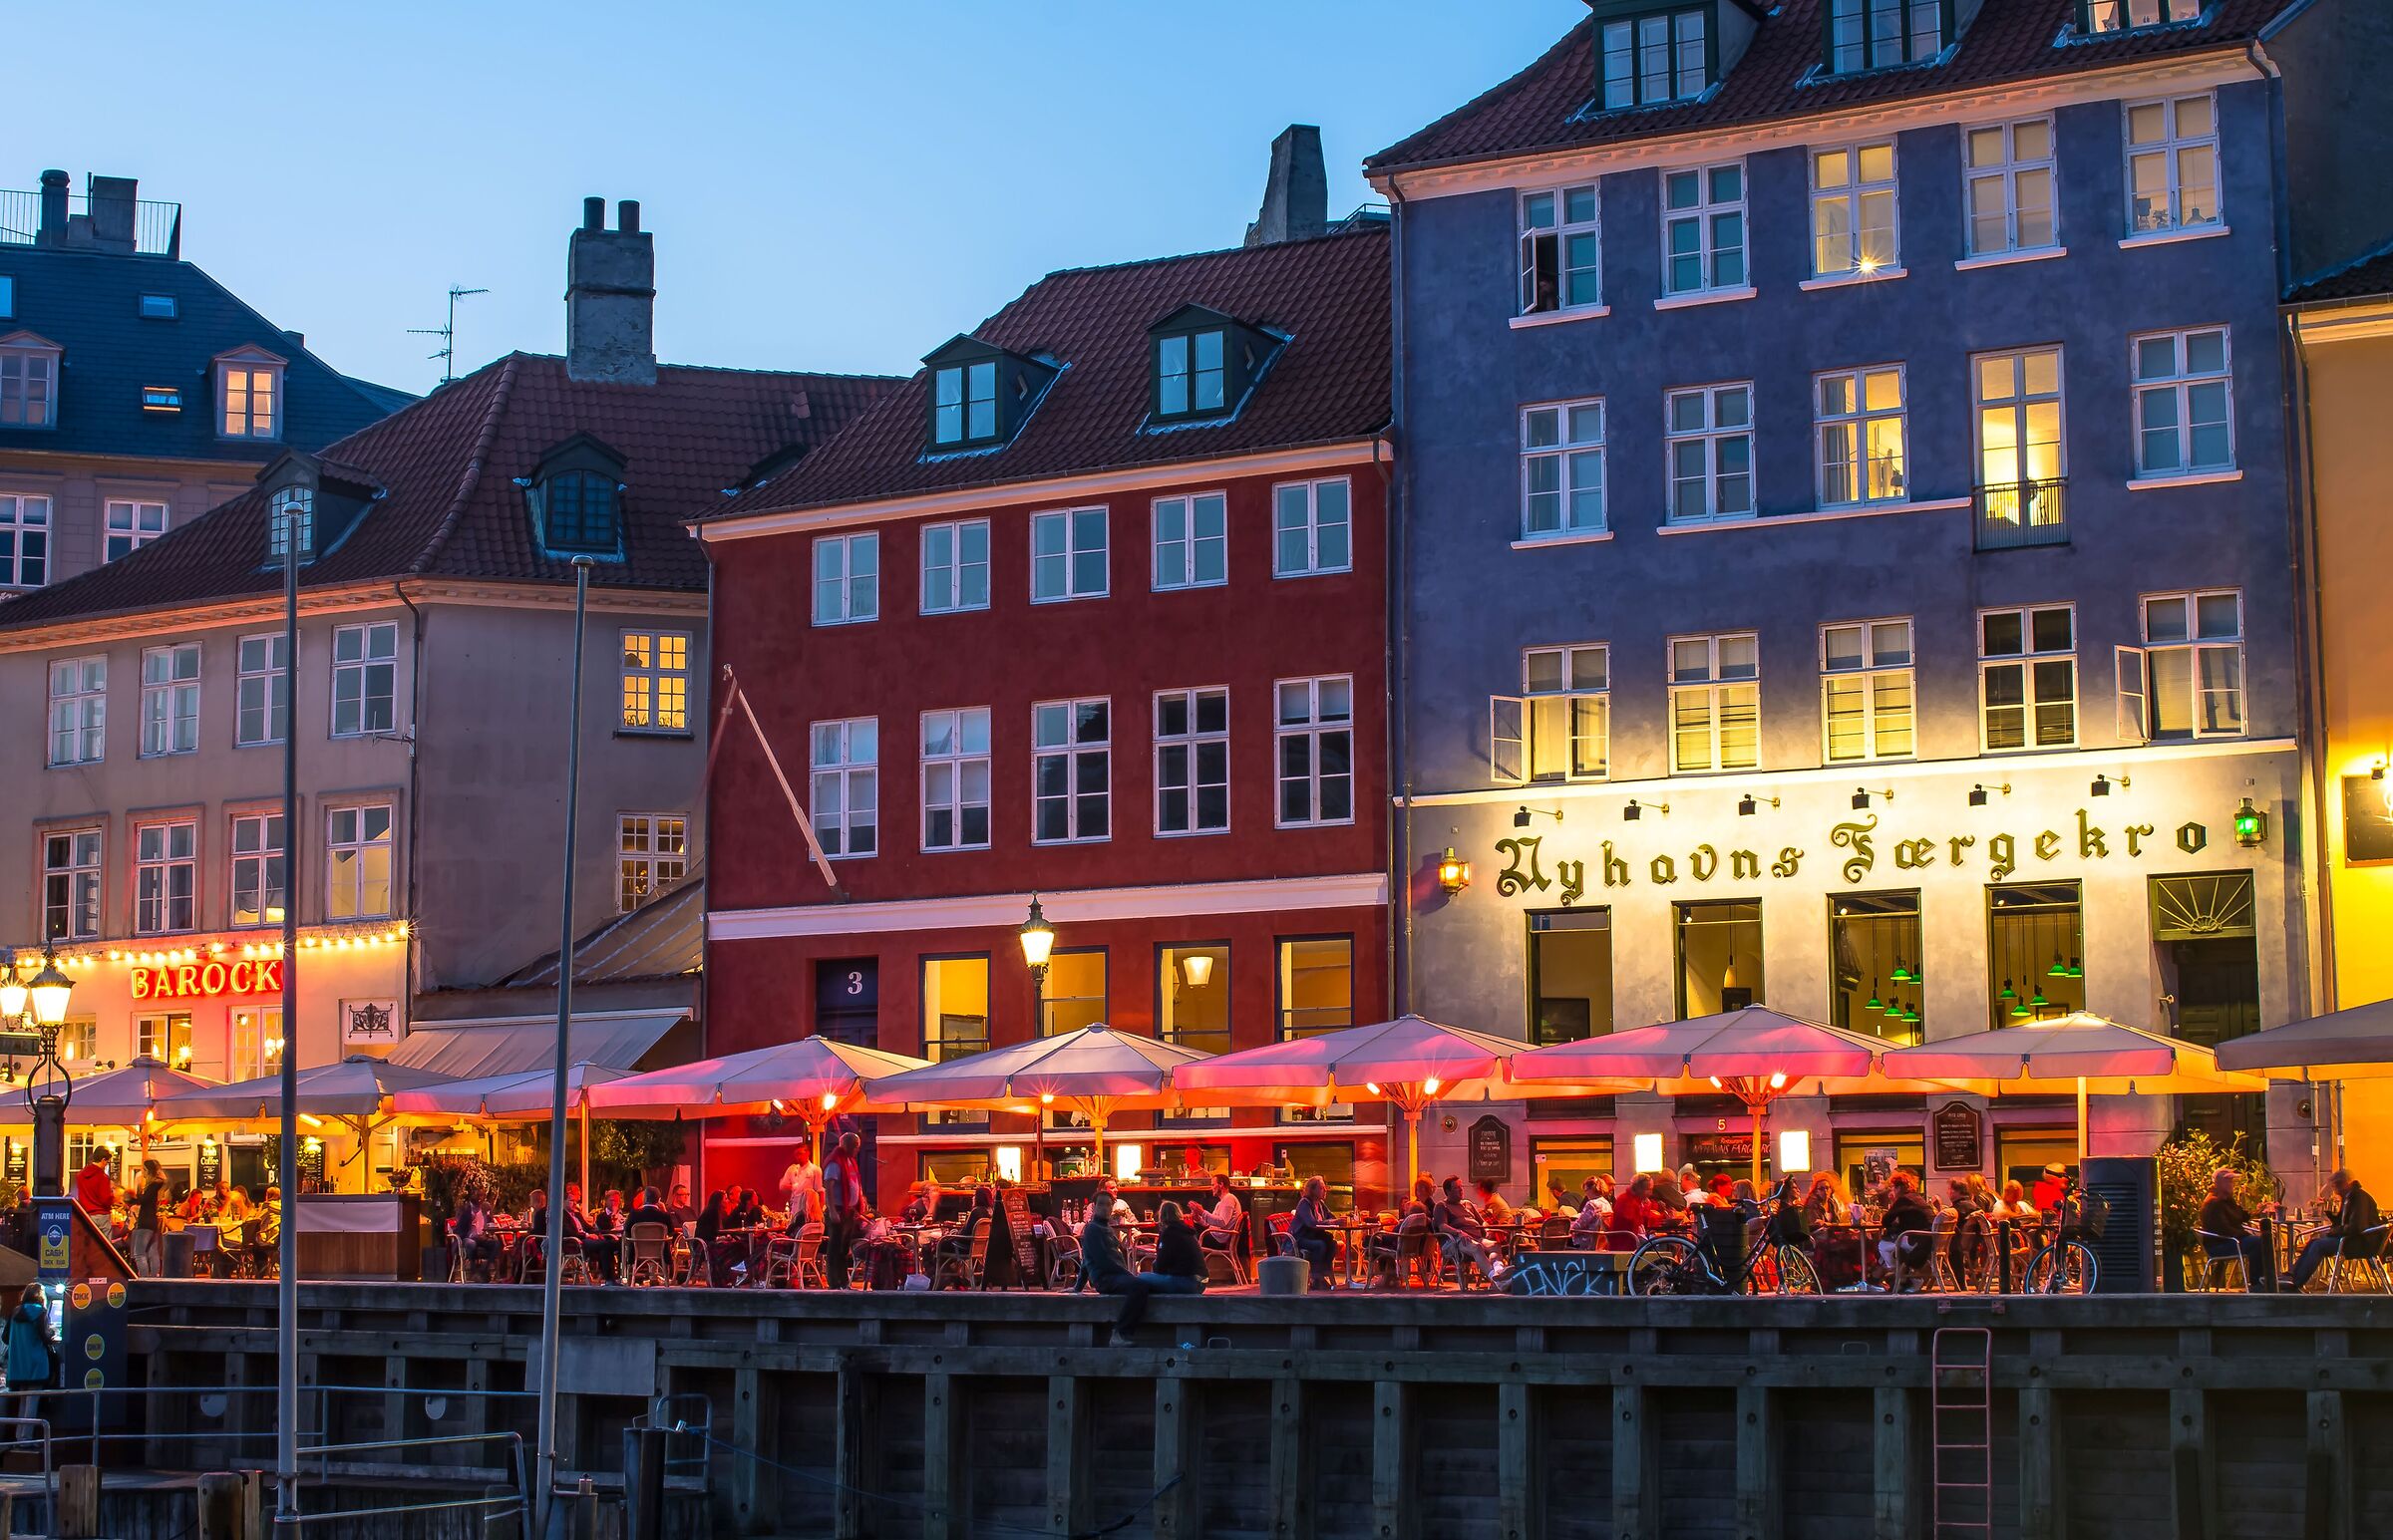 Glimpse of Nyhavn...